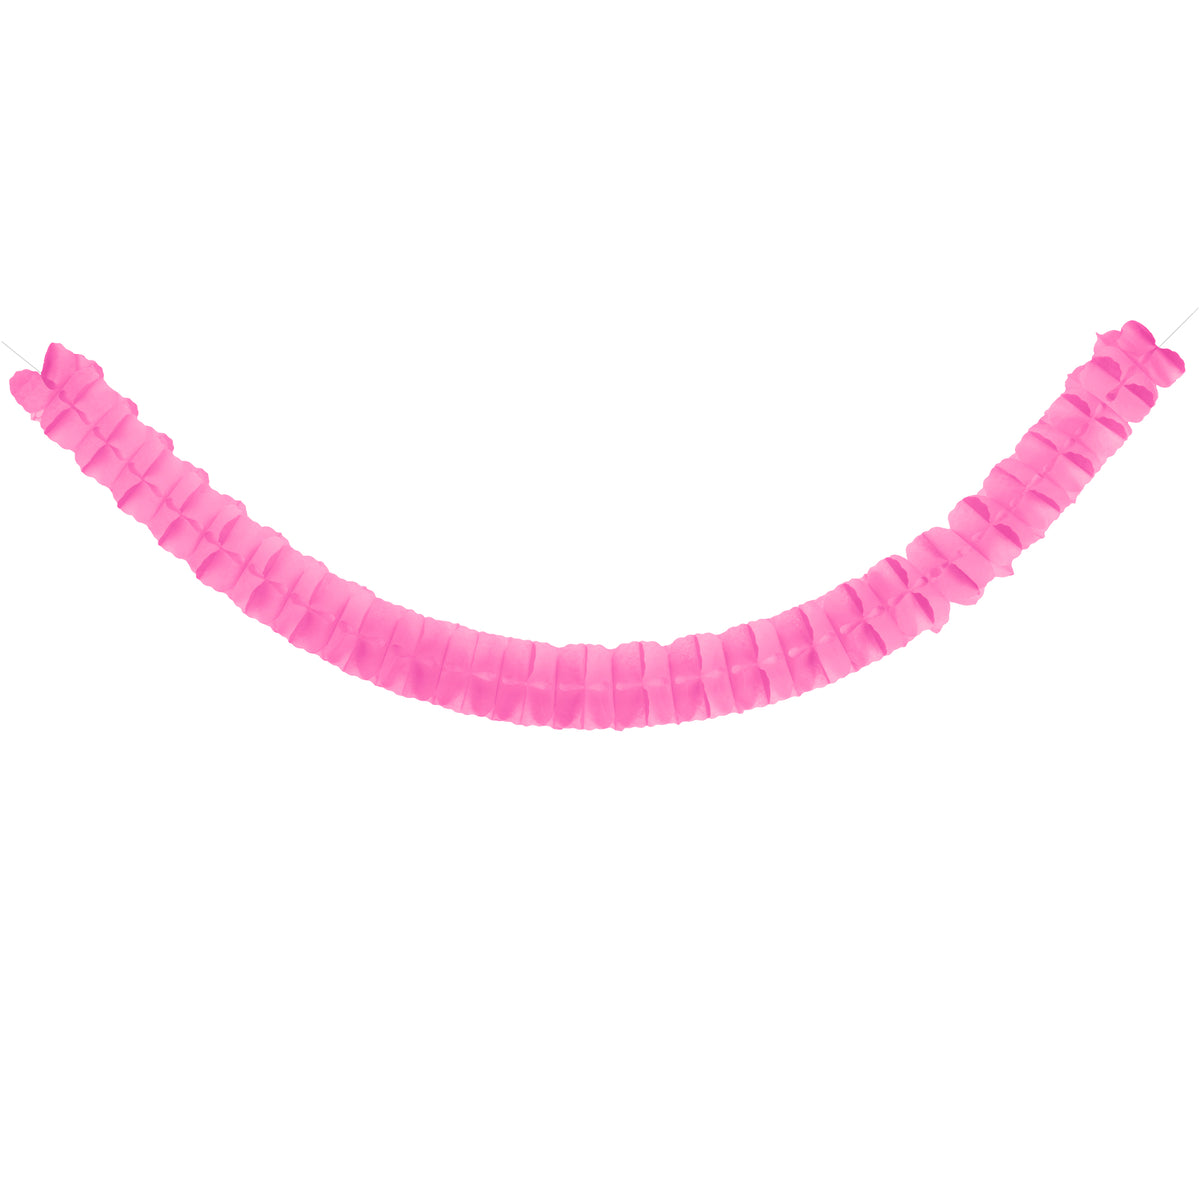 Pink Party Tassel Garland Kit